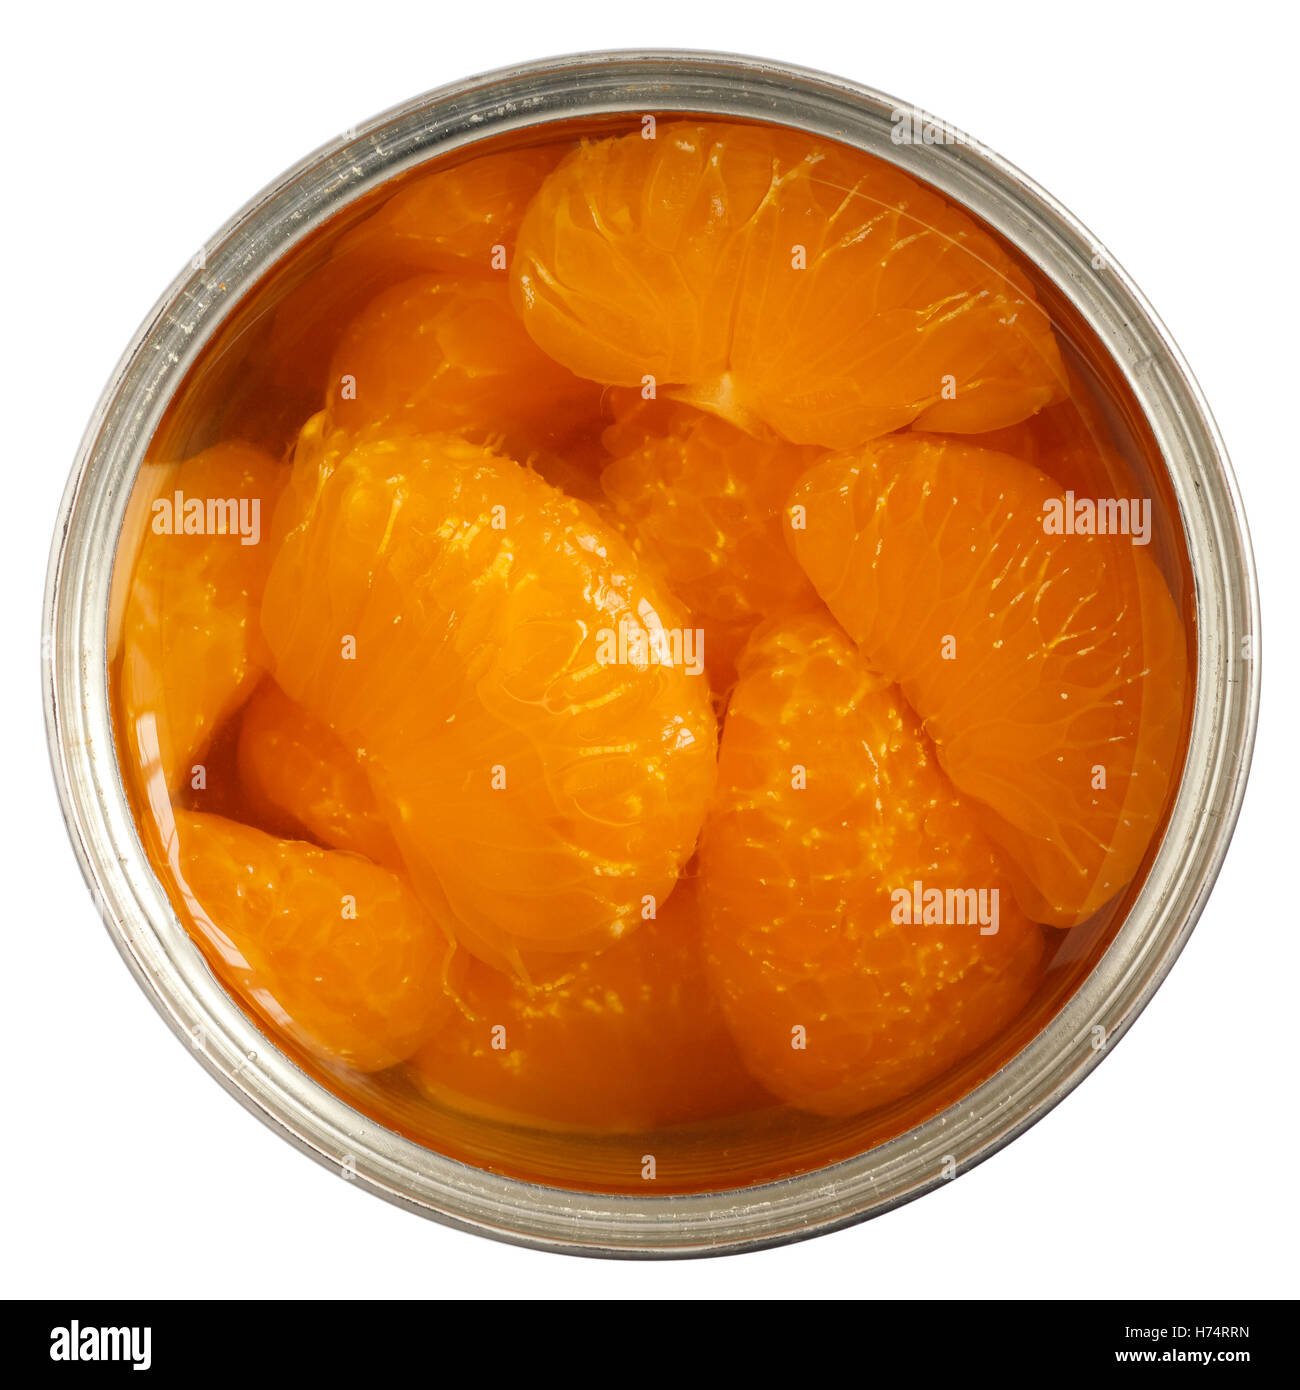 Offenen Dose Mandarinen im hellen Sirup. Stockfoto